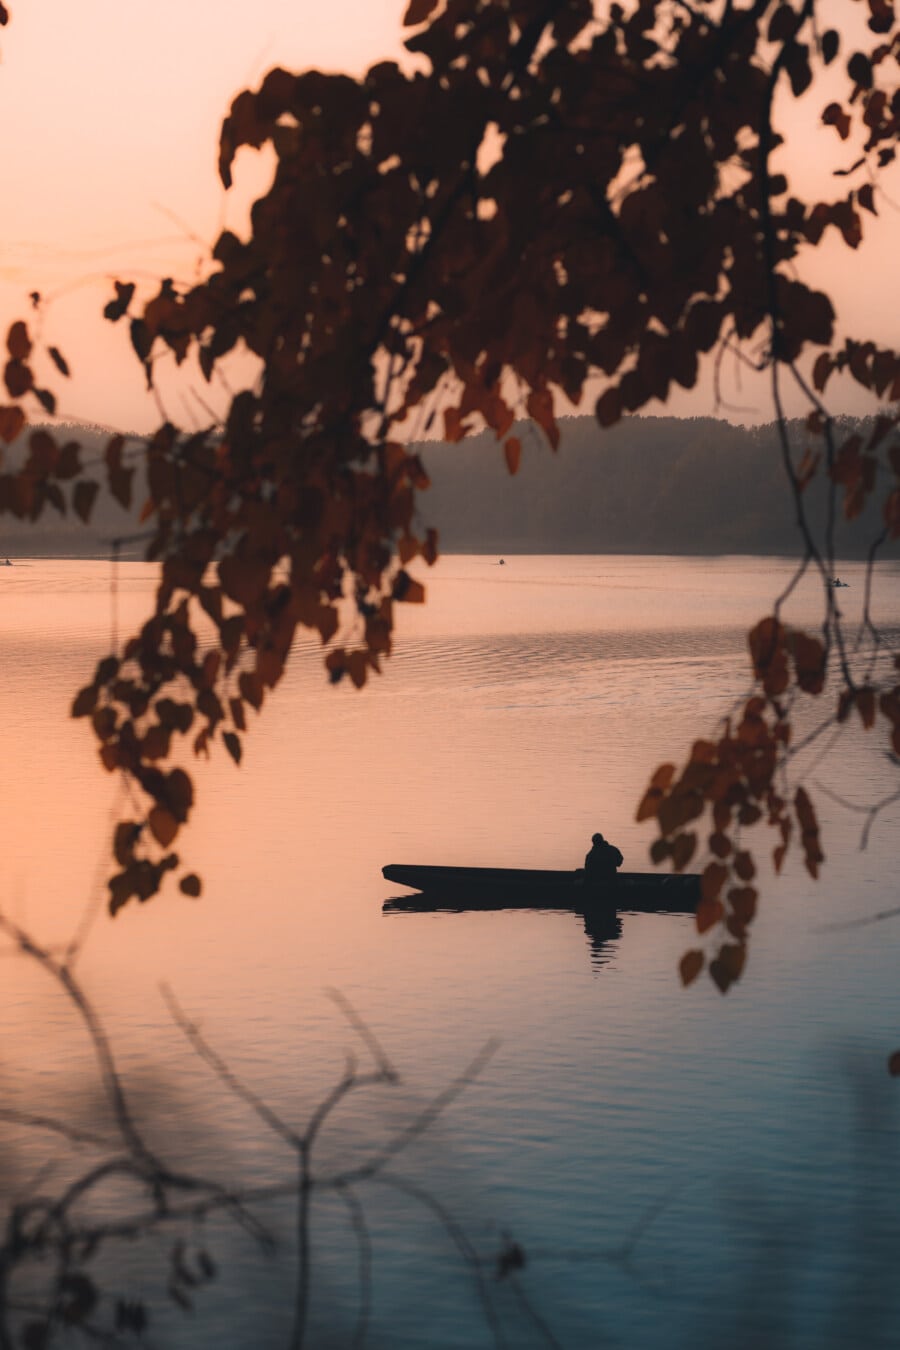 dawn, lakeside, fishing boat, silhouette, water, nature, lake, landscape, evening, dusk